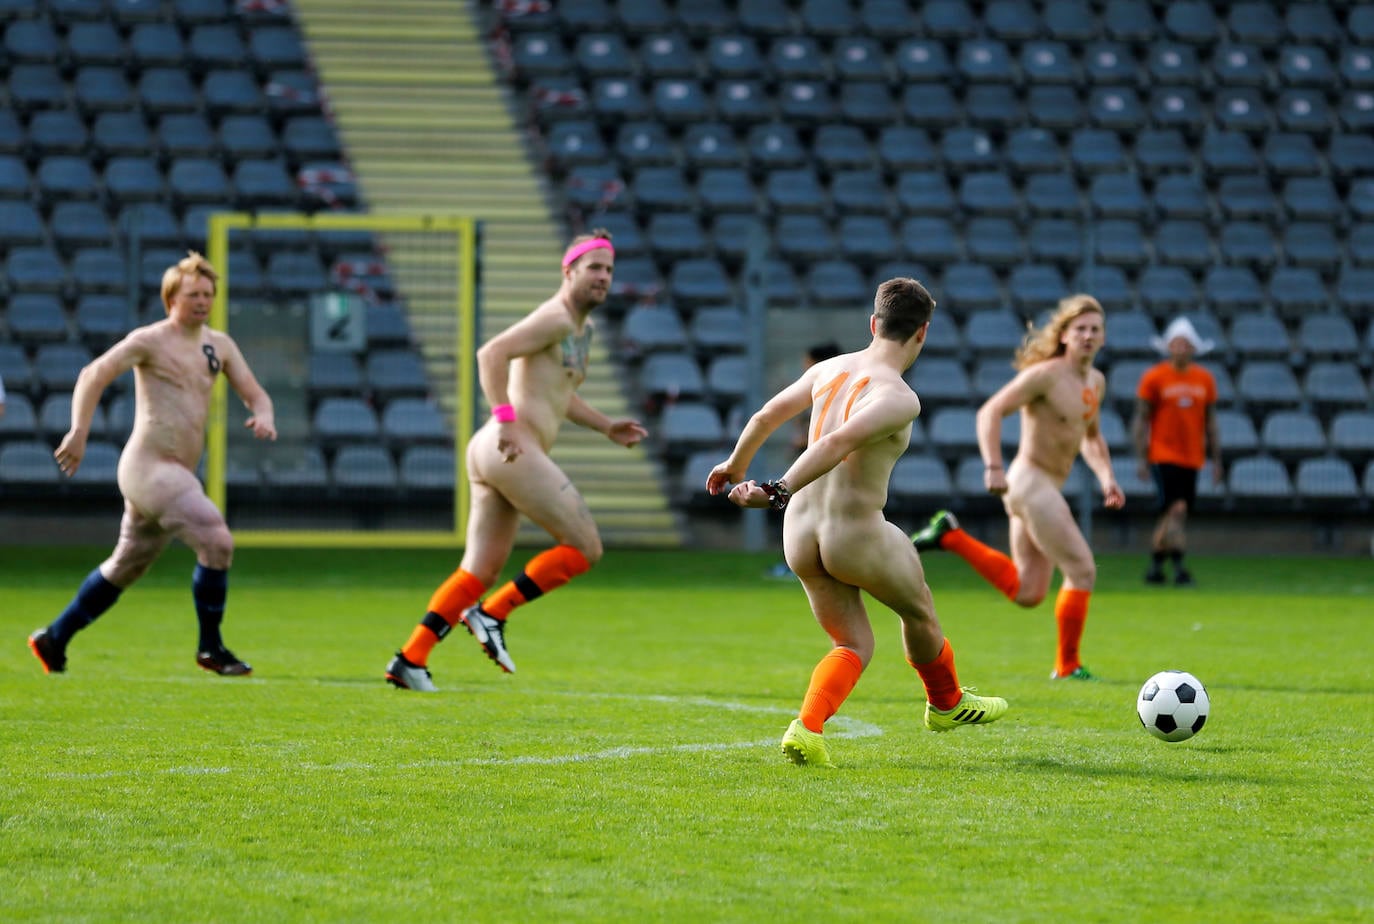 голые парни играют футбол фото 15